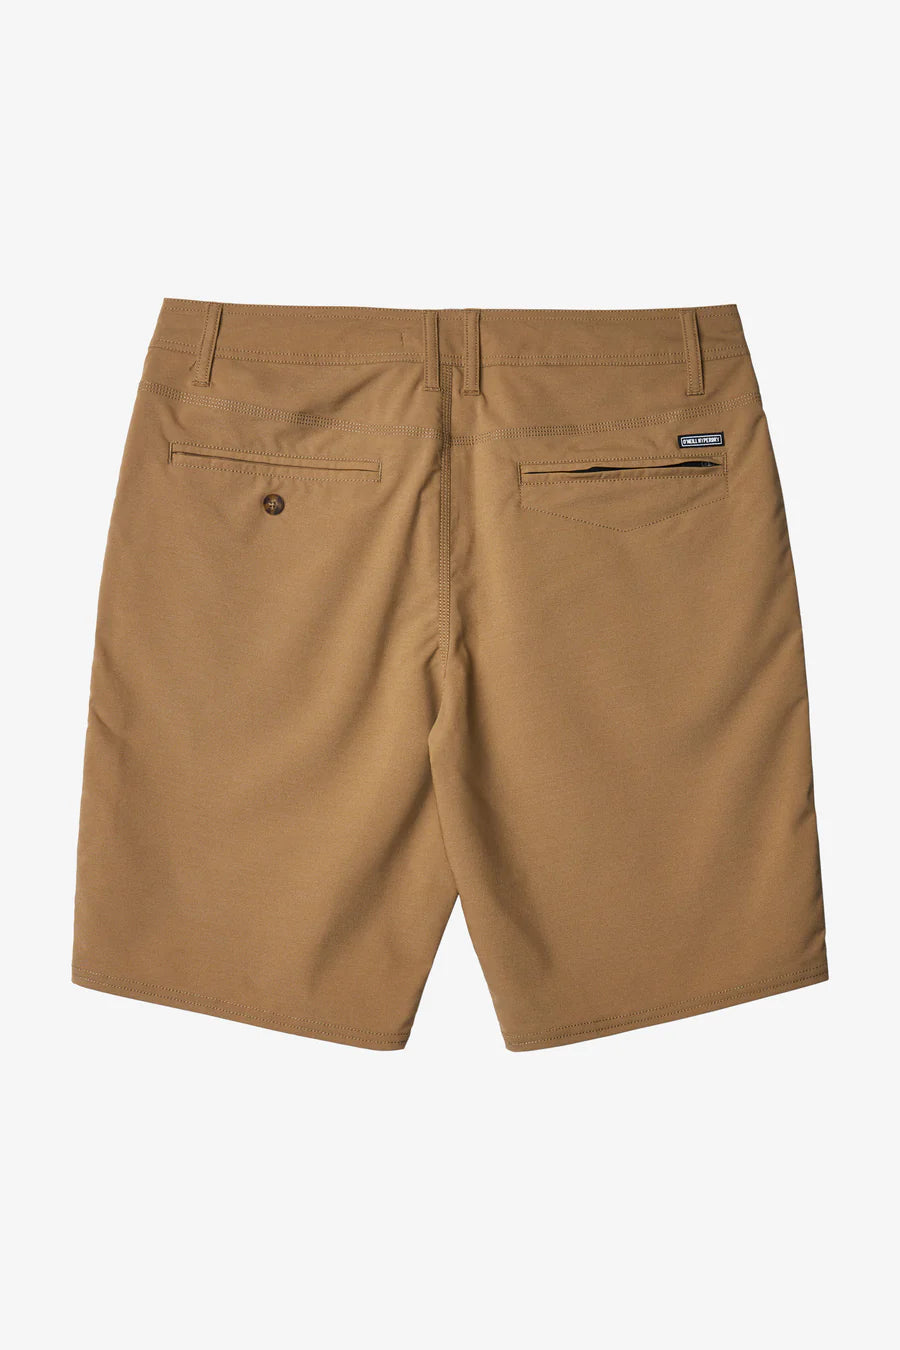 Stockton 20" Hybrid Shorts - Dark Khaki